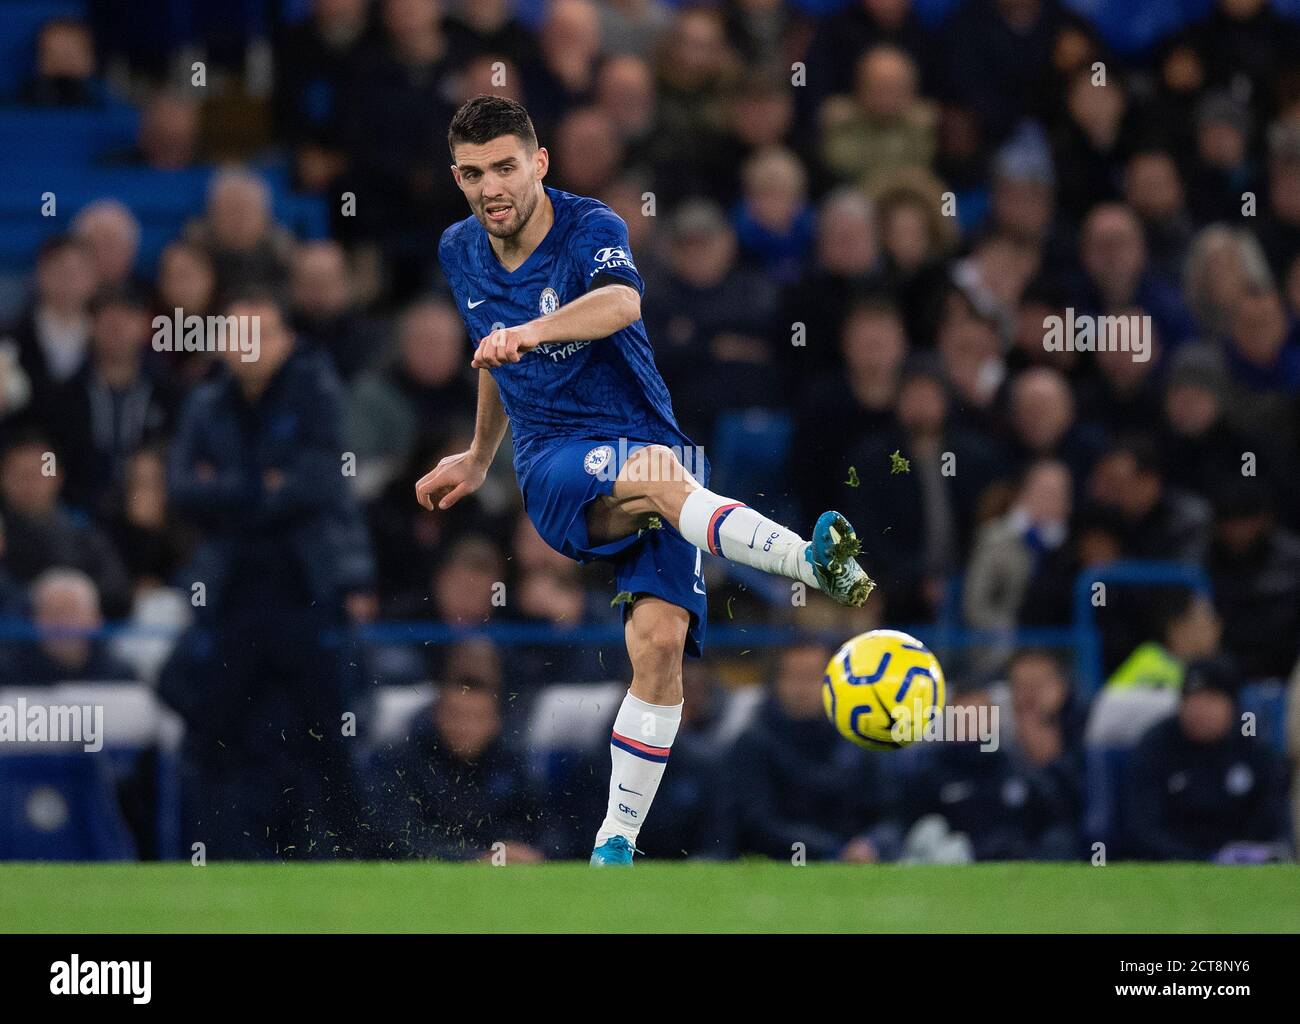 Chelsea's Mateo Kovacic. Chelsea v West Ham. Premier League.   PHOTO CREDIT :   © MARK PAIN / ALAMY STOCK PHOTO Stock Photo